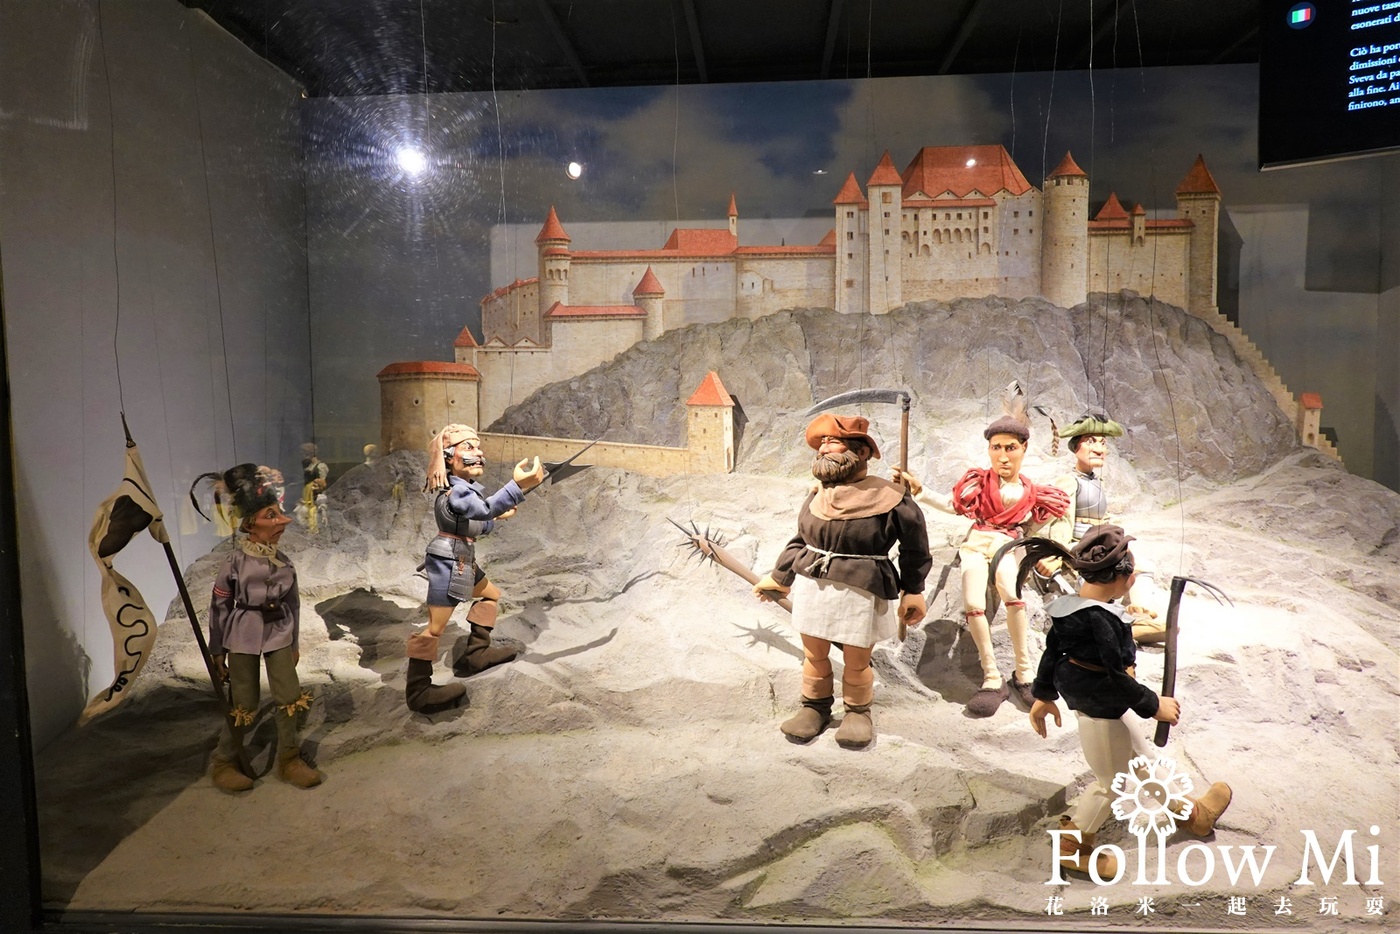 Festung Hohensalzburg,奧地利景點,薩俺斯堡,薩爾斯堡要塞